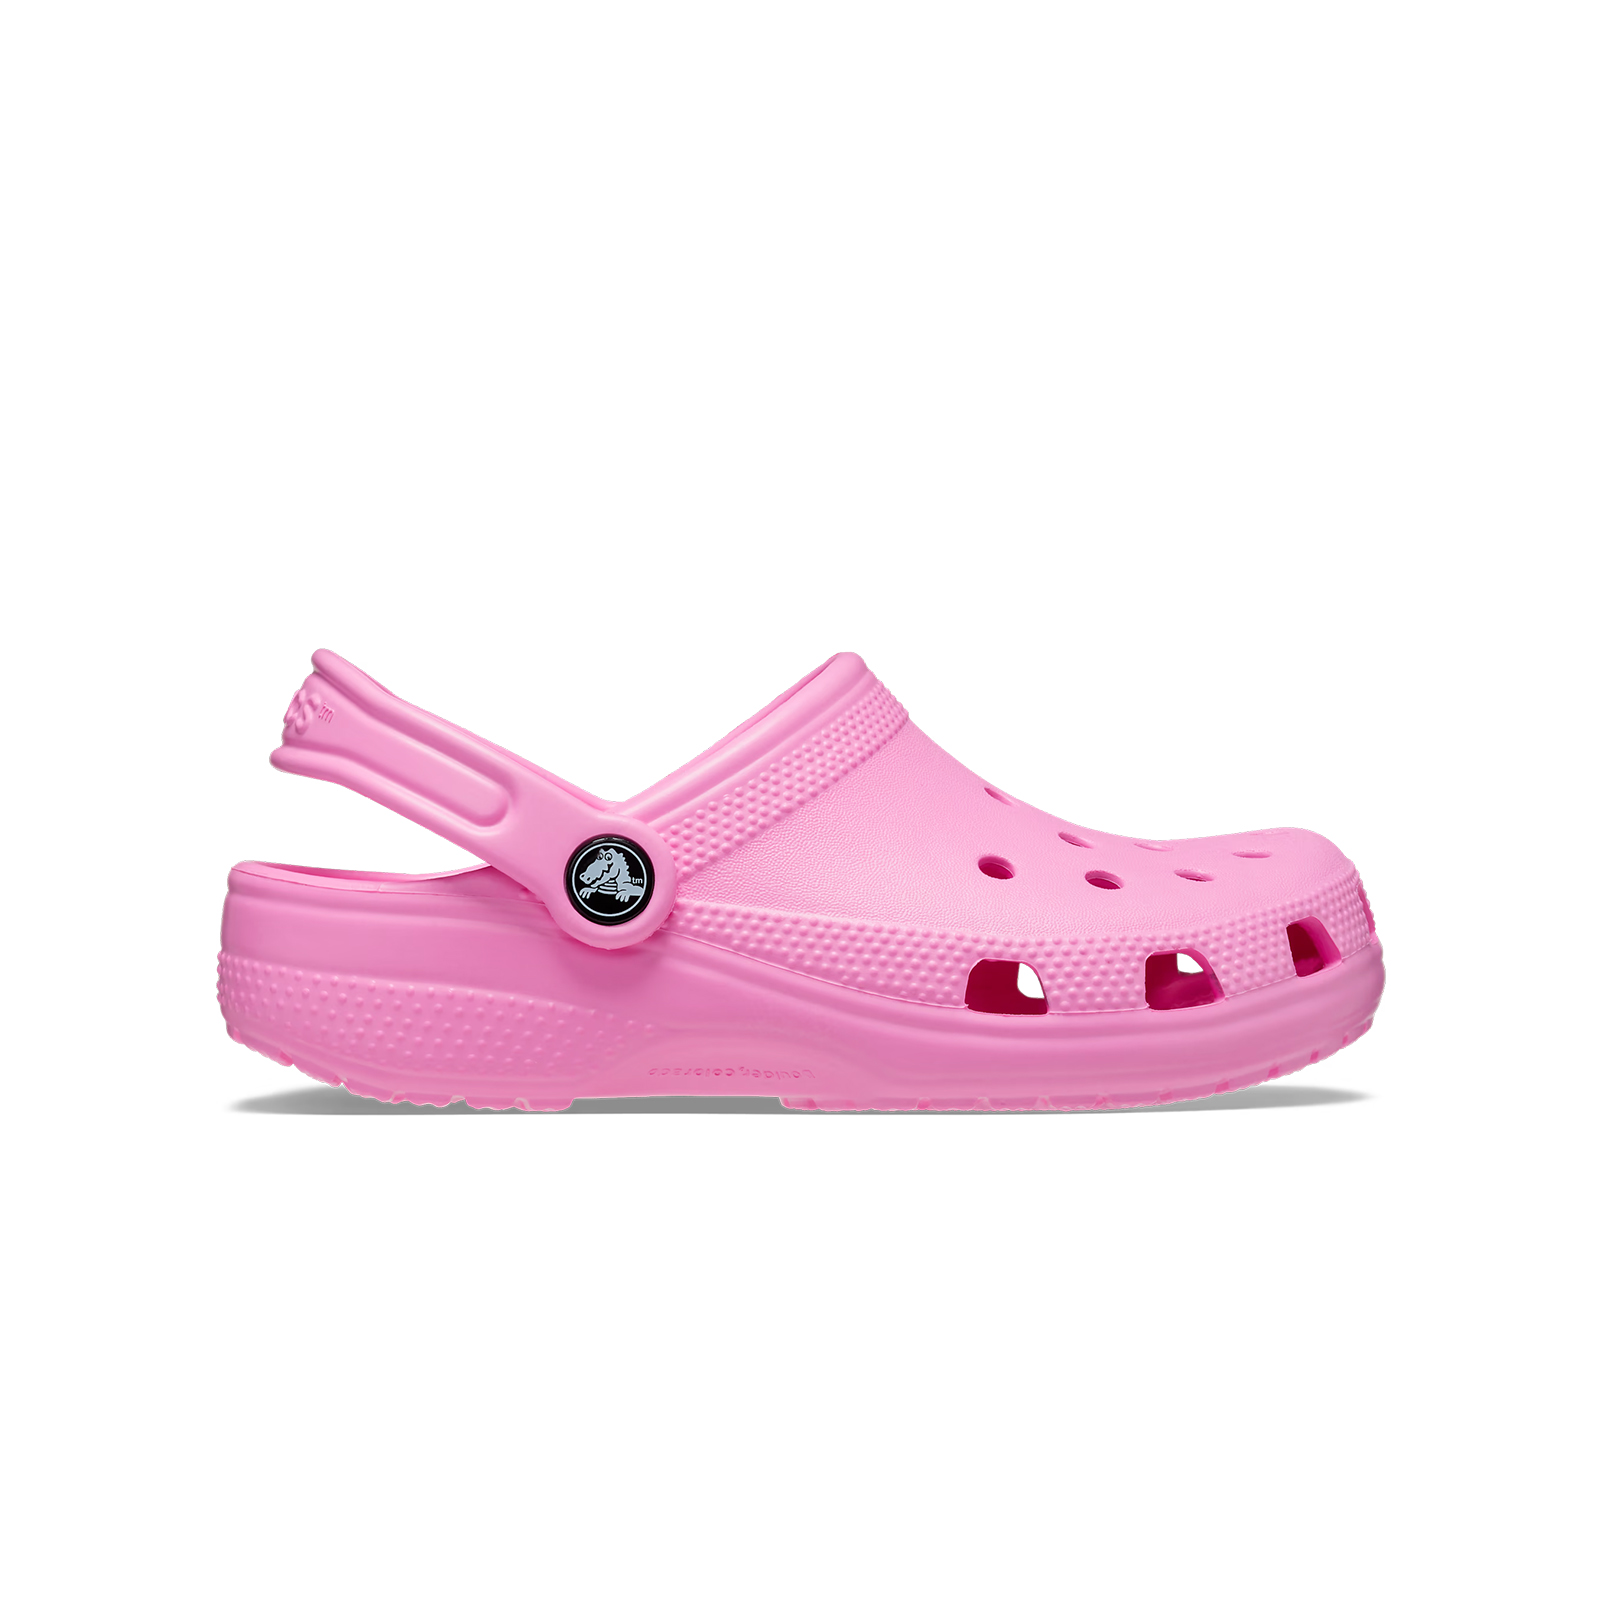 Crocs - CLASSIC CLOG K - TAFFY PINK Παιδικά > Παπούτσια > Clogs > Glogs